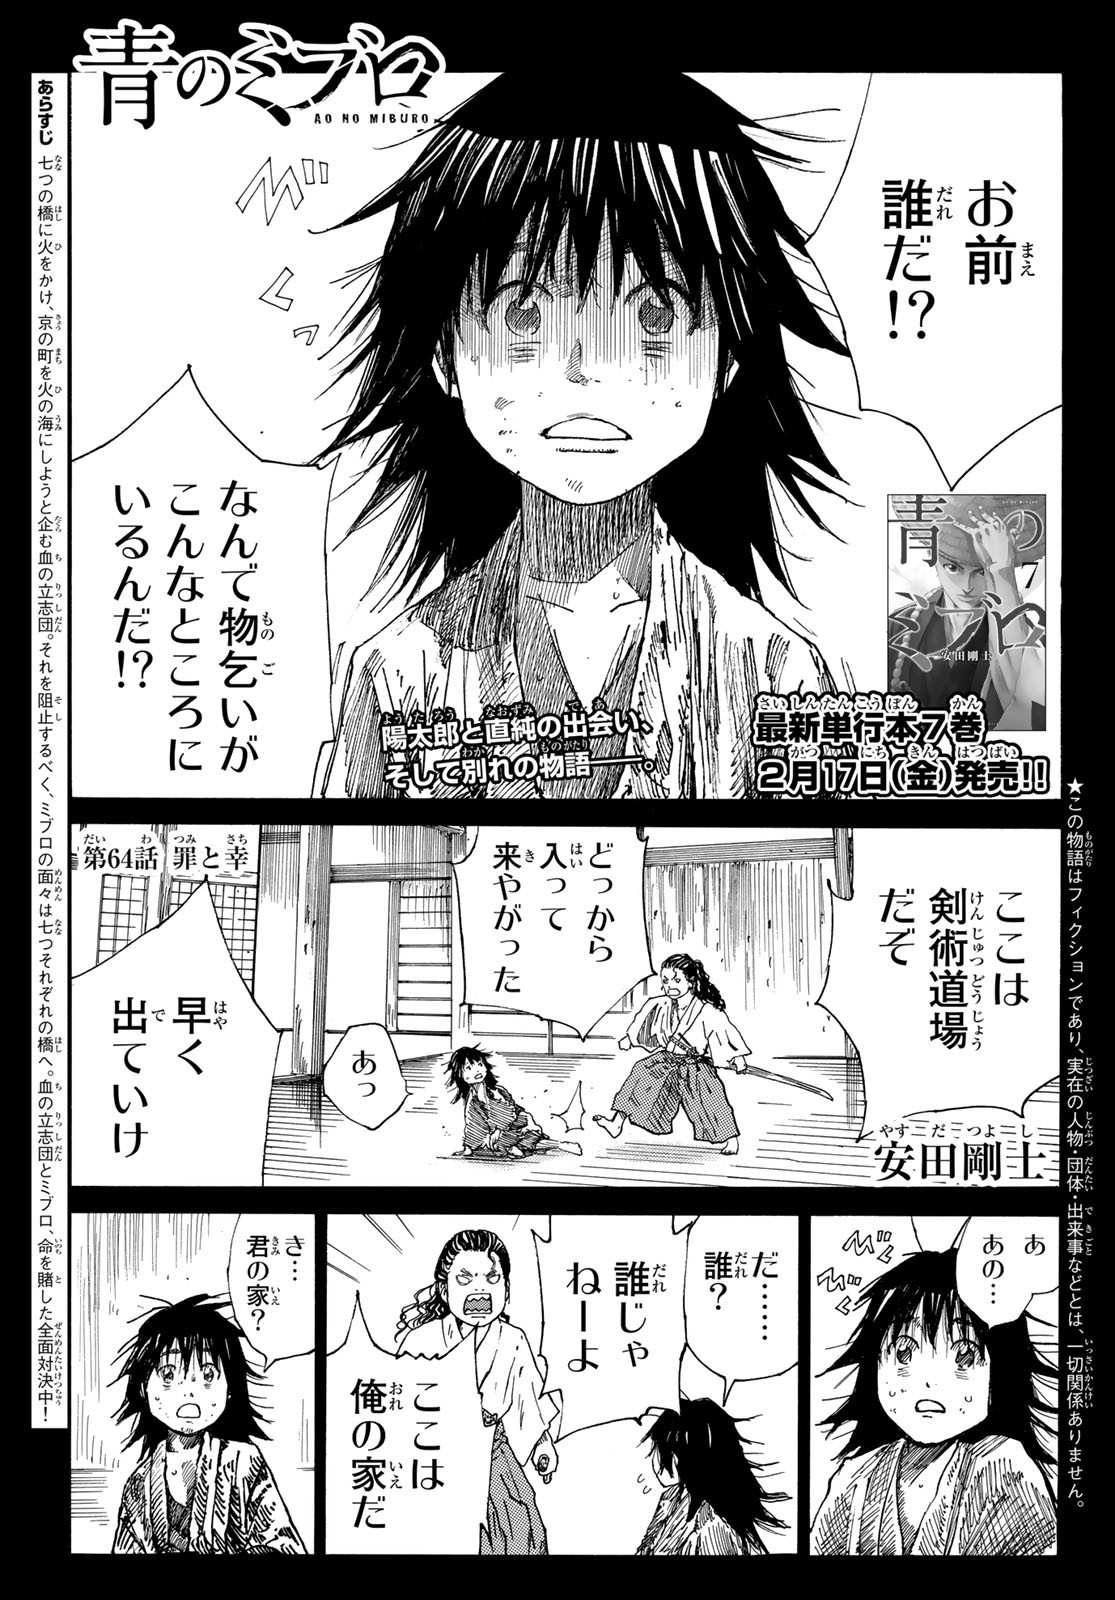 Ao no Miburo - Chapter 064 - Page 1